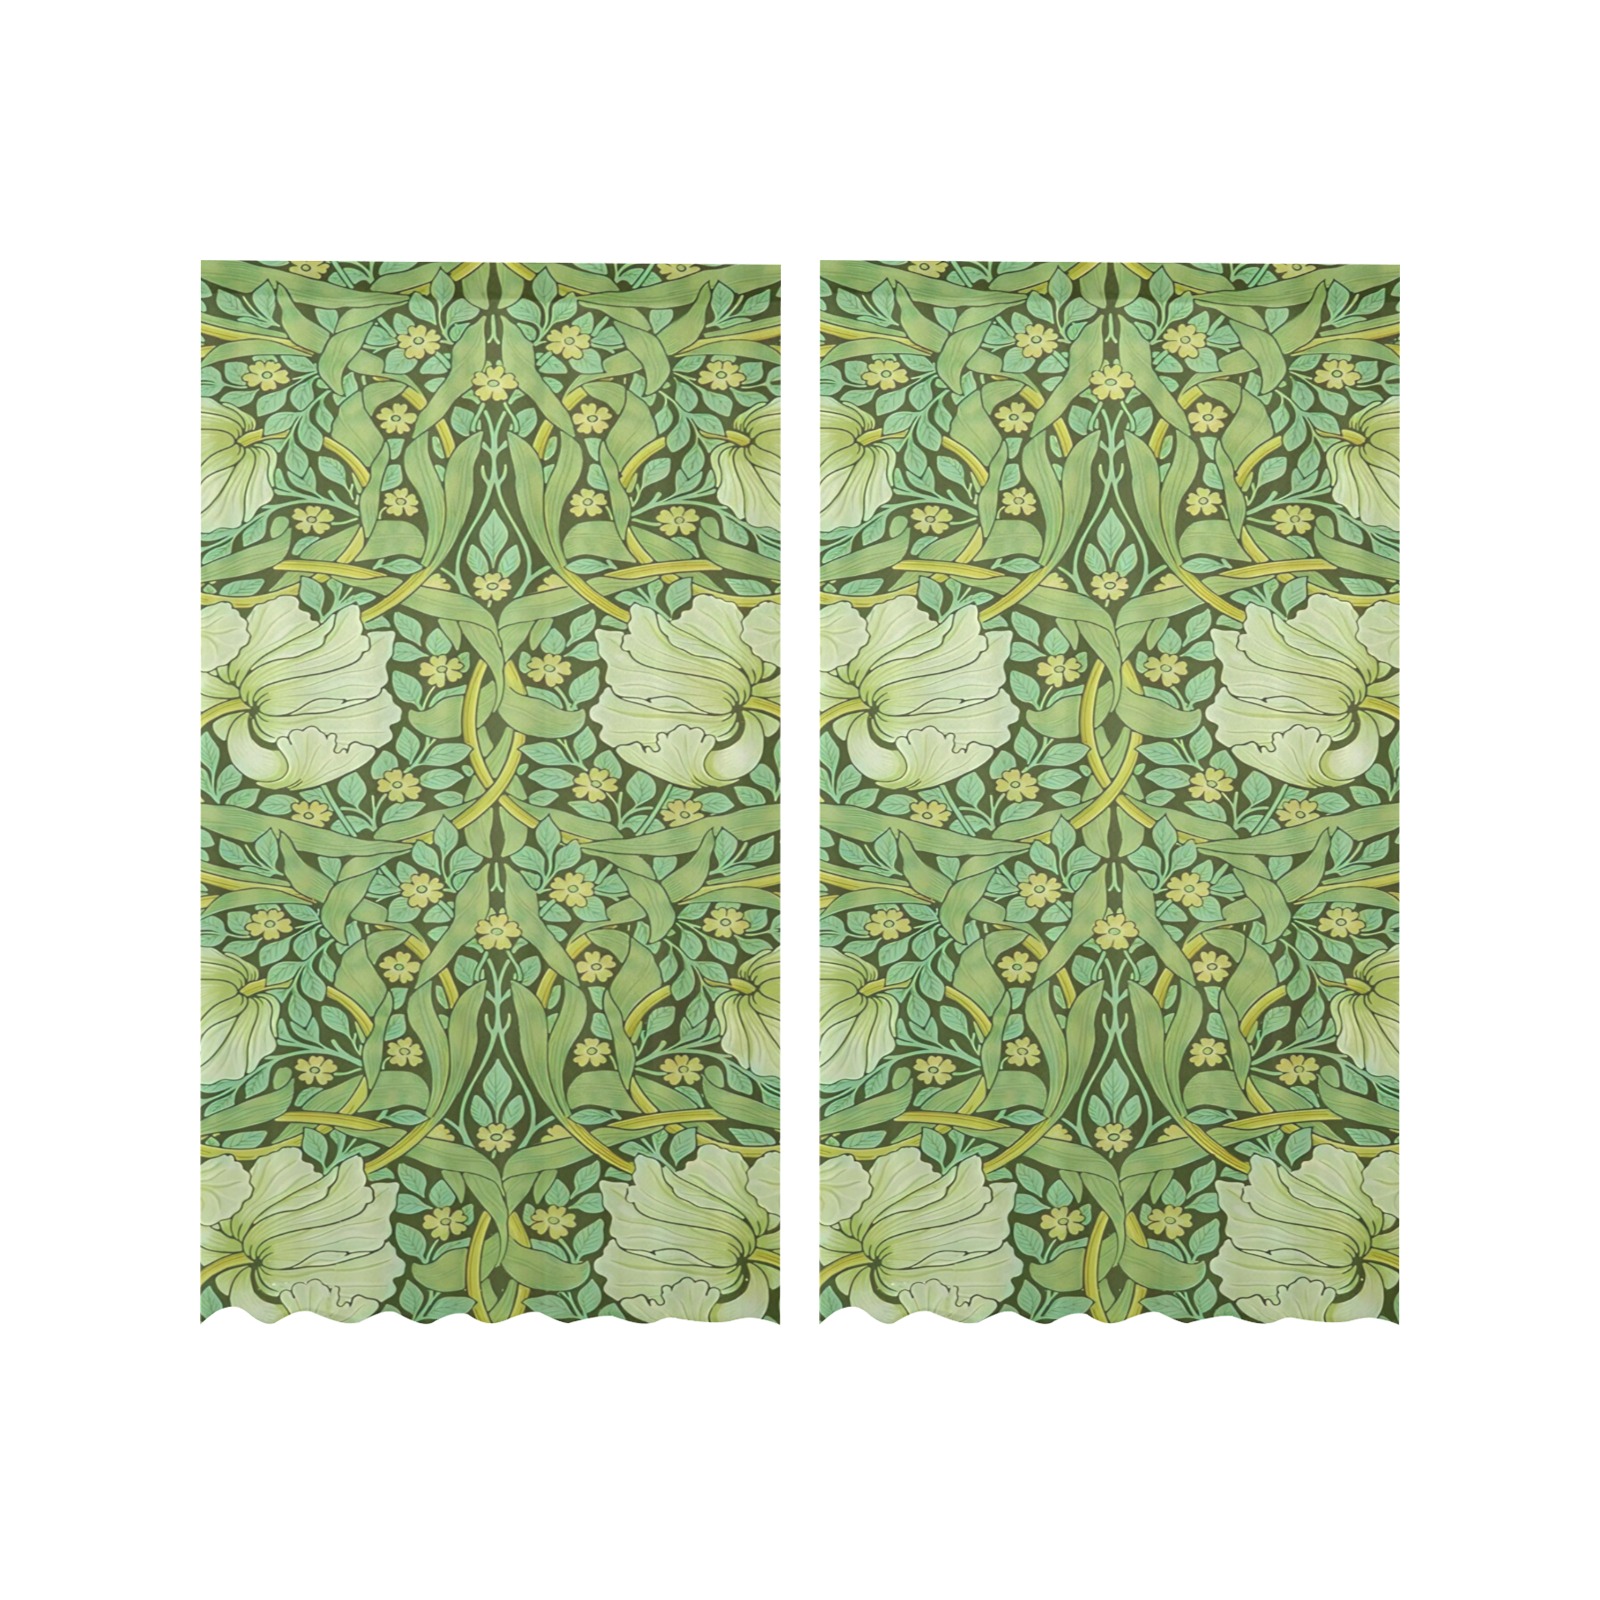 William Morris - Pimpernel Gauze Curtain 28"x63" (Two-Piece)